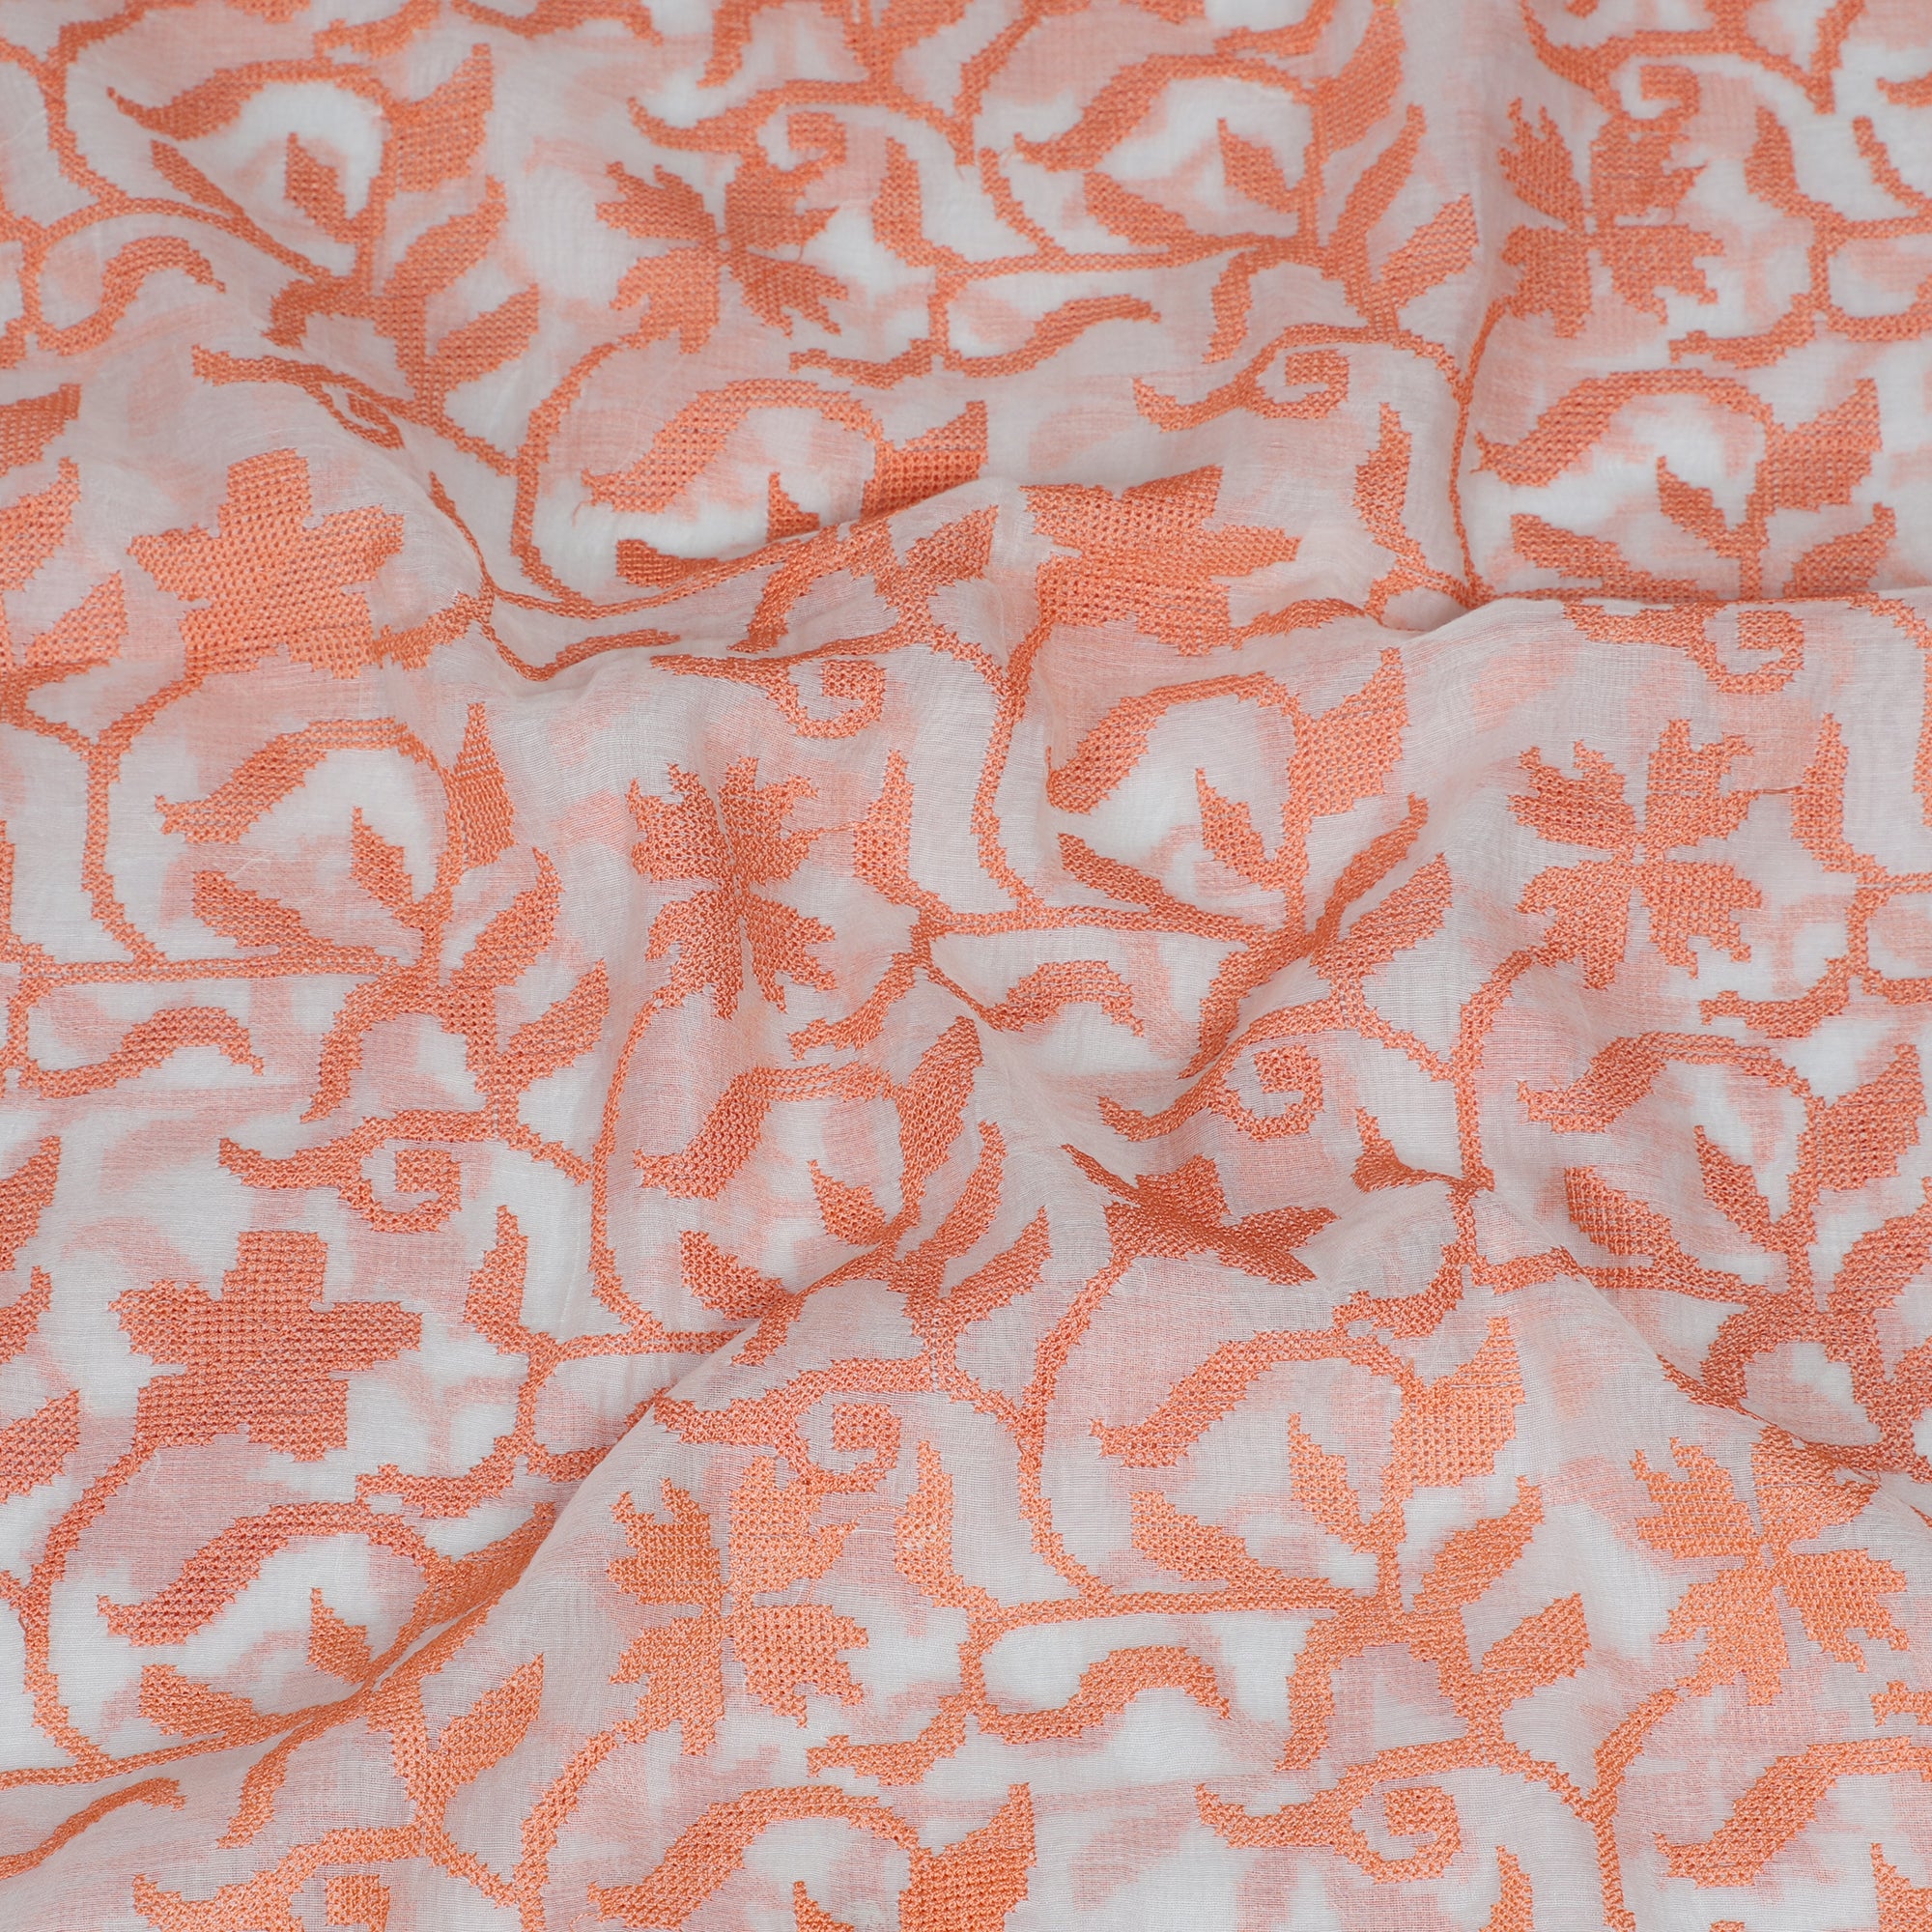 White-Orange Color Embroidered Chanderi Stole with Crochet Border